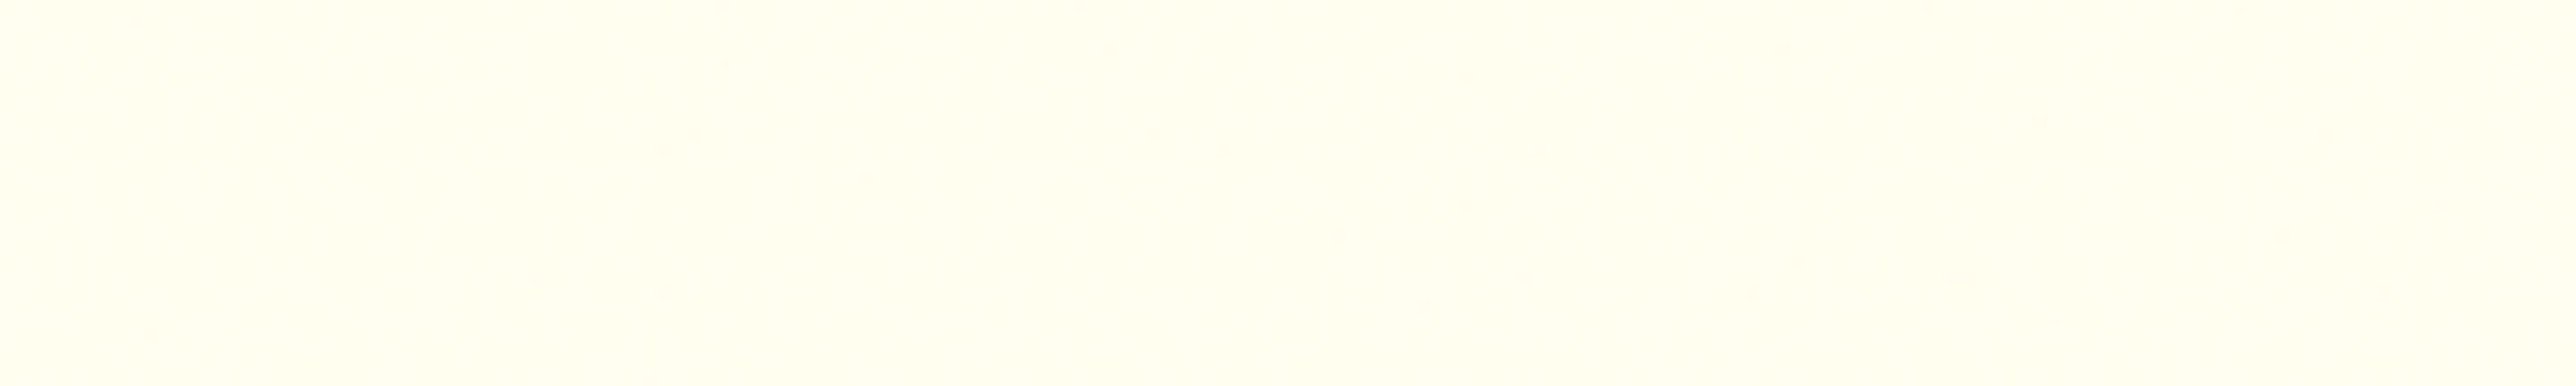 skai® smartline colore classico ivory           0,20 1420